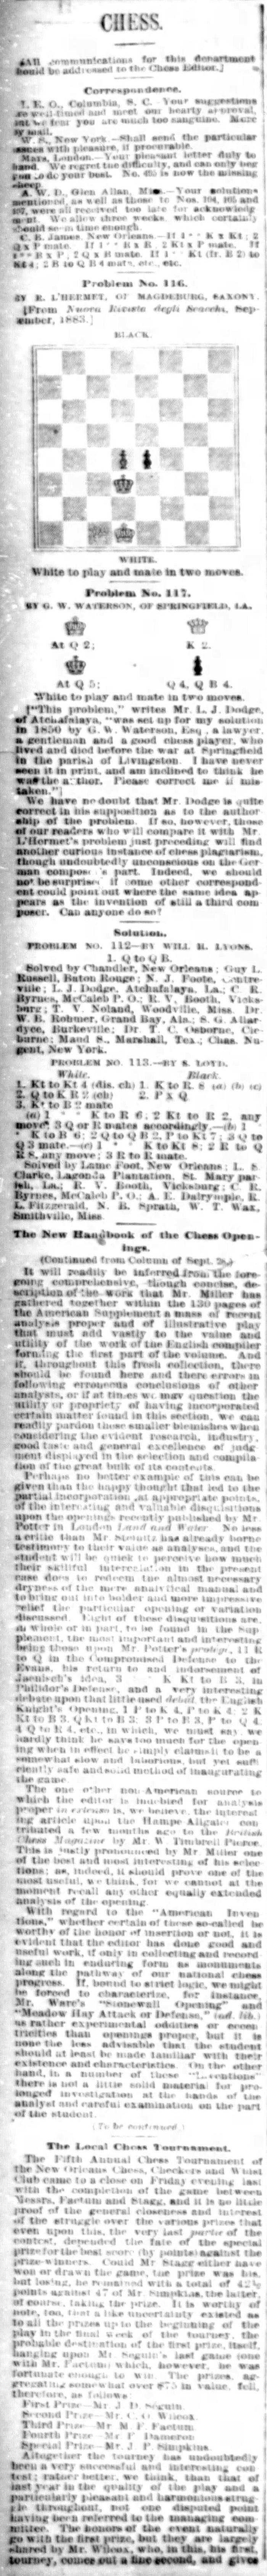 1884.10.19-01 New Orleans Times-Democrat.jpg